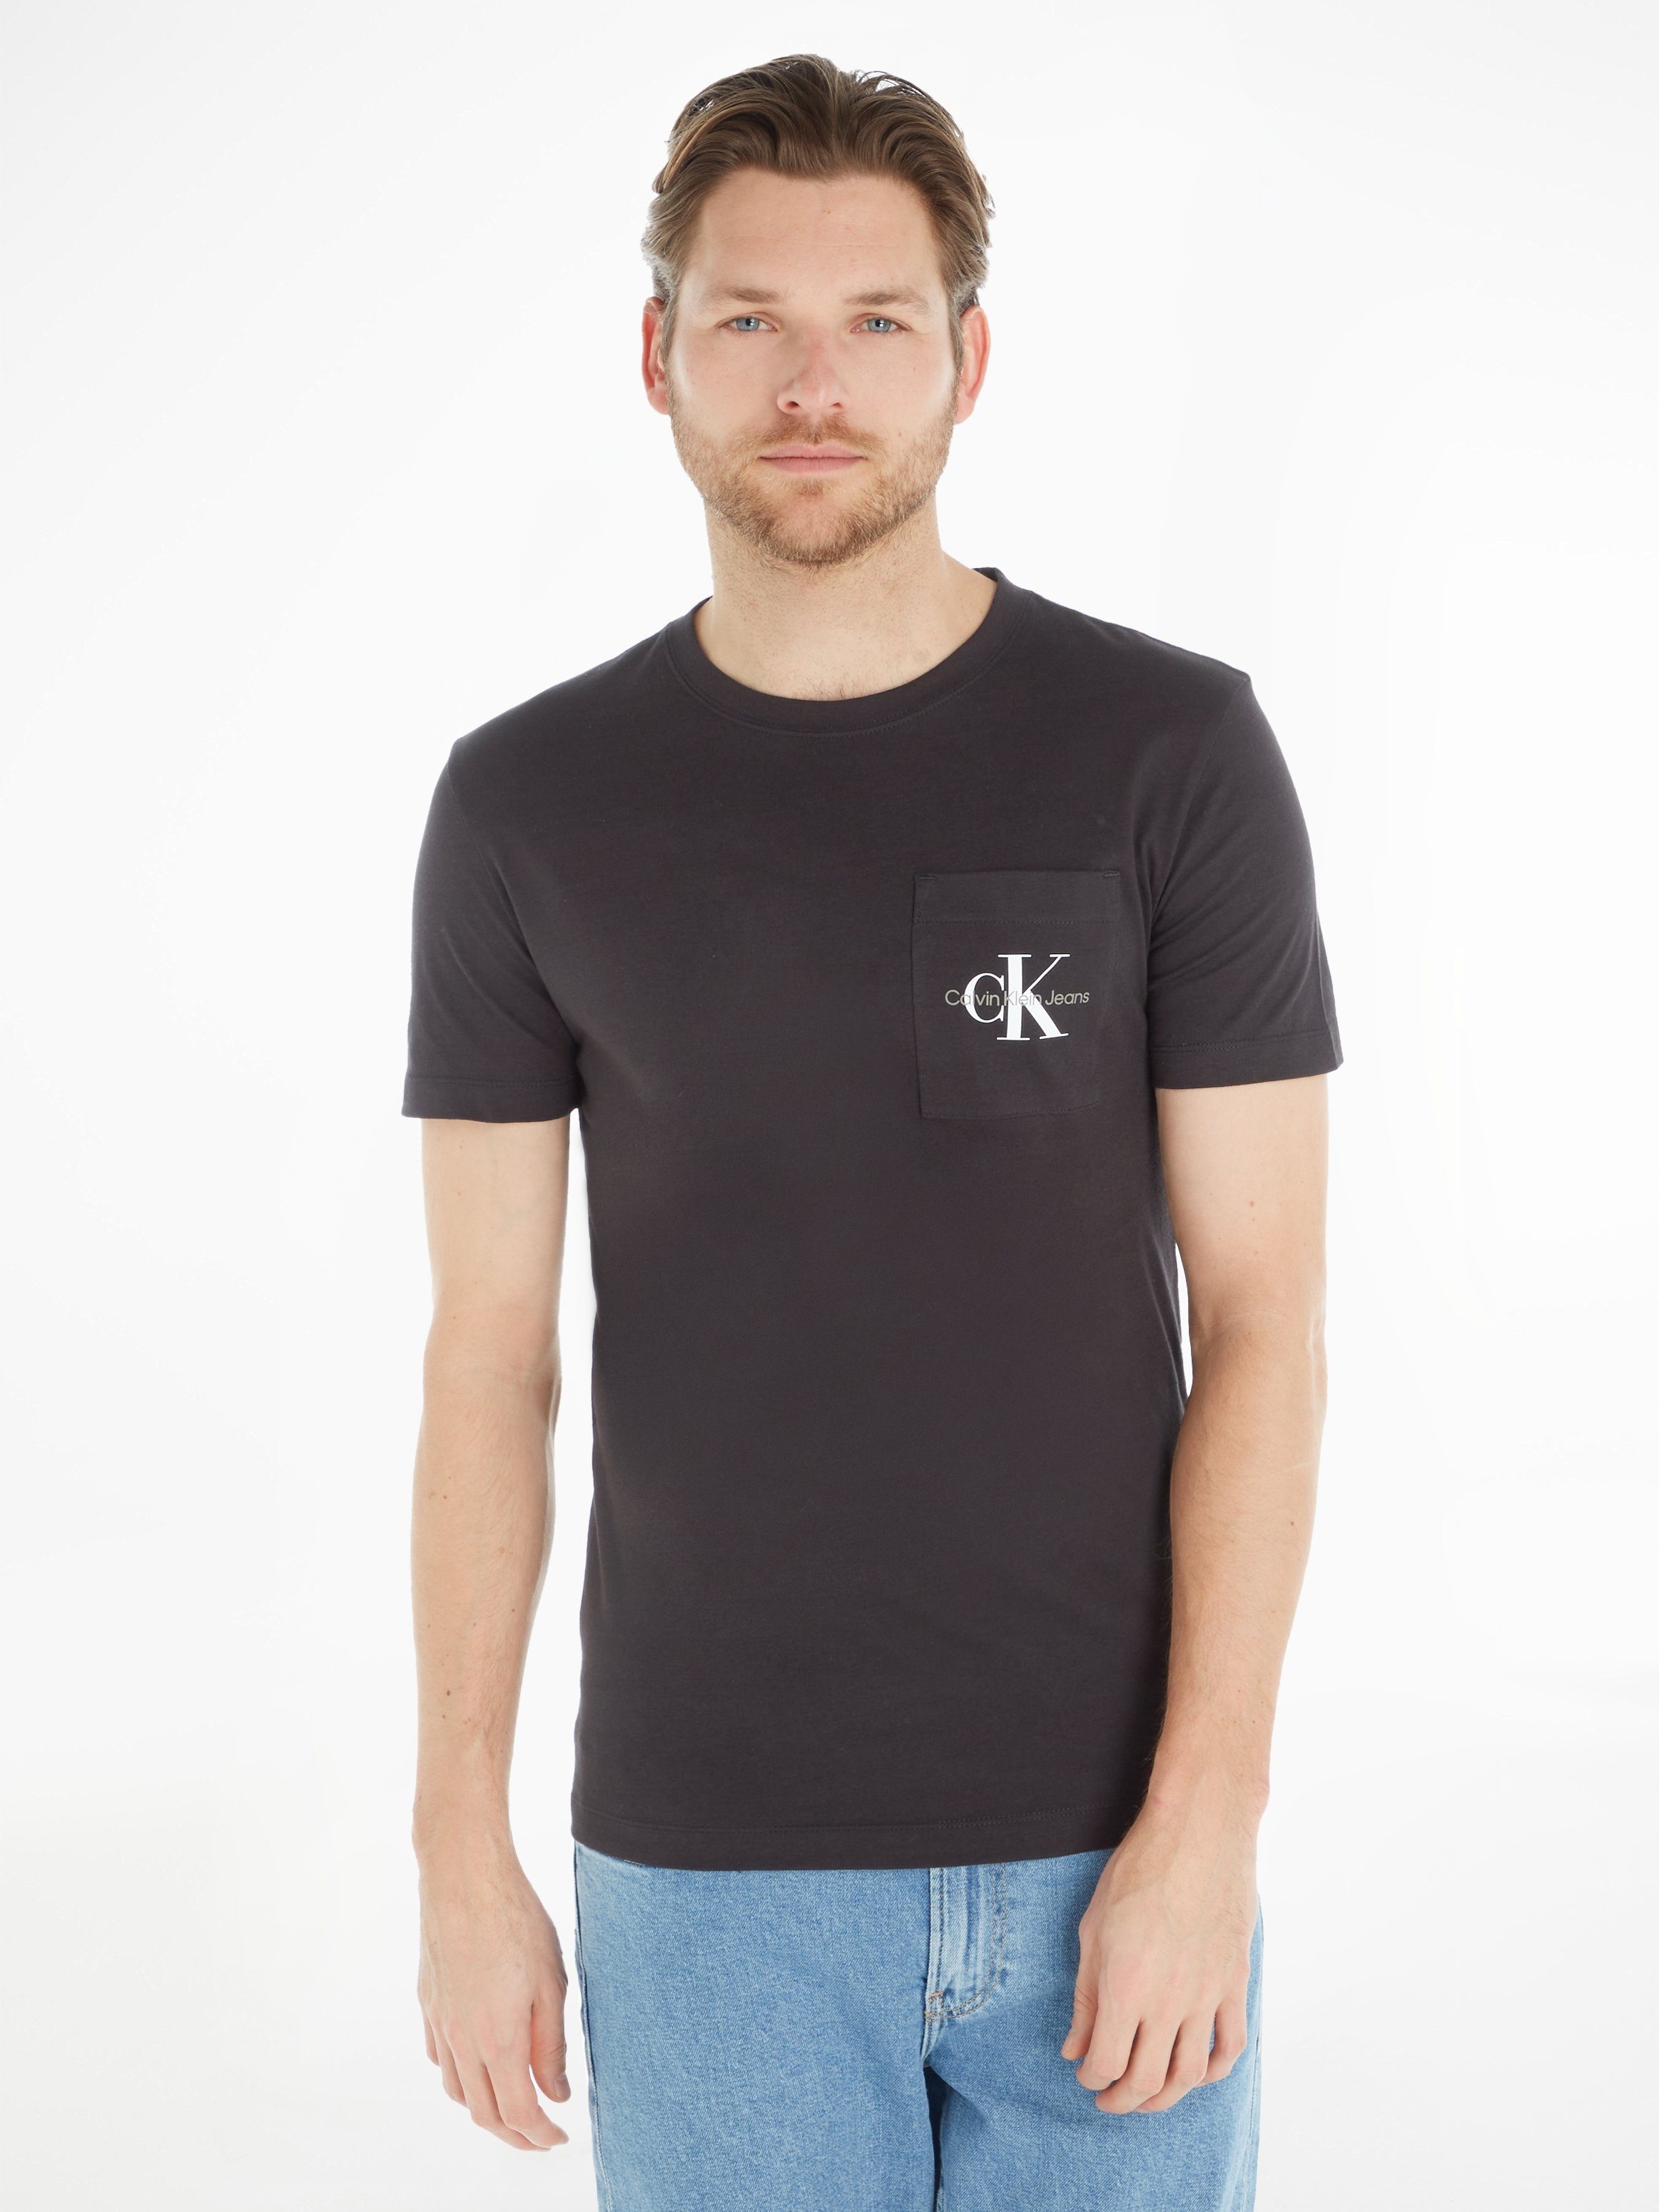 TEE CORE Ck MONOGRAM Black Jeans POCKET SLIM Klein T-Shirt Calvin